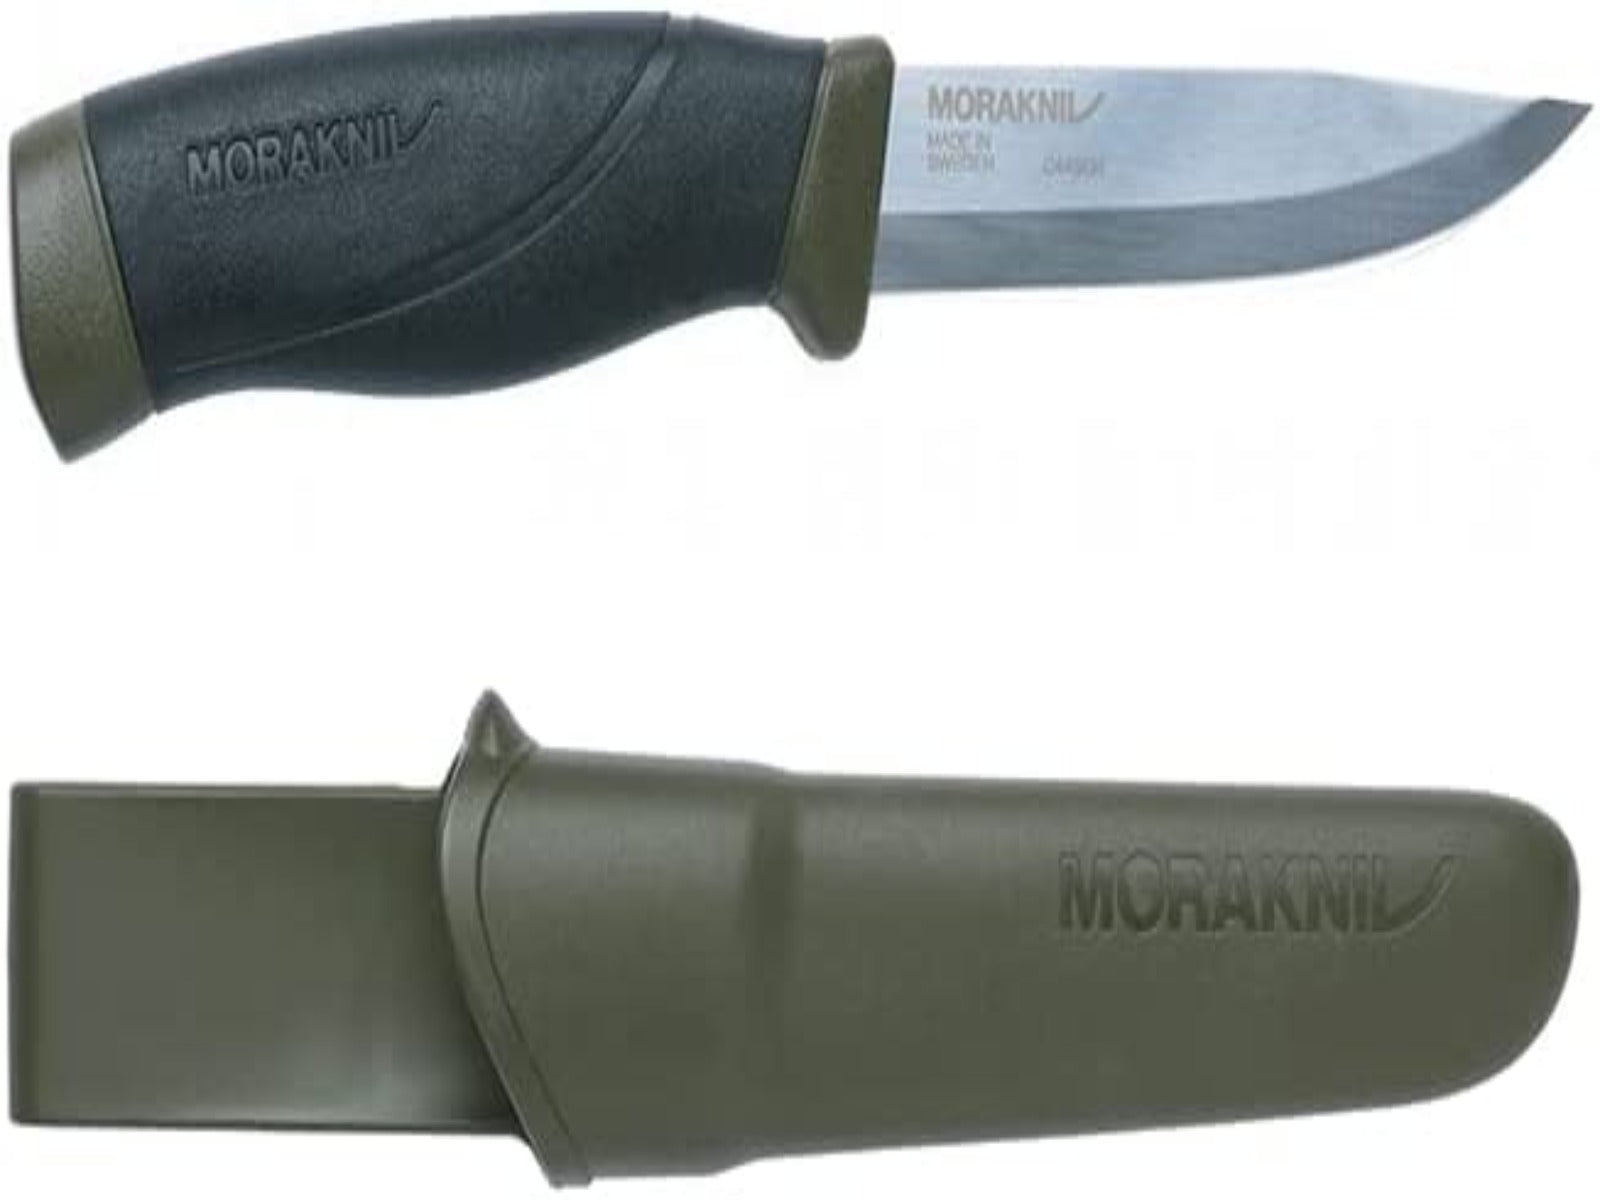 8.5 MORA MORAKNIV COMPANION MG FIXED BLADE KNIFE Survival Hunting